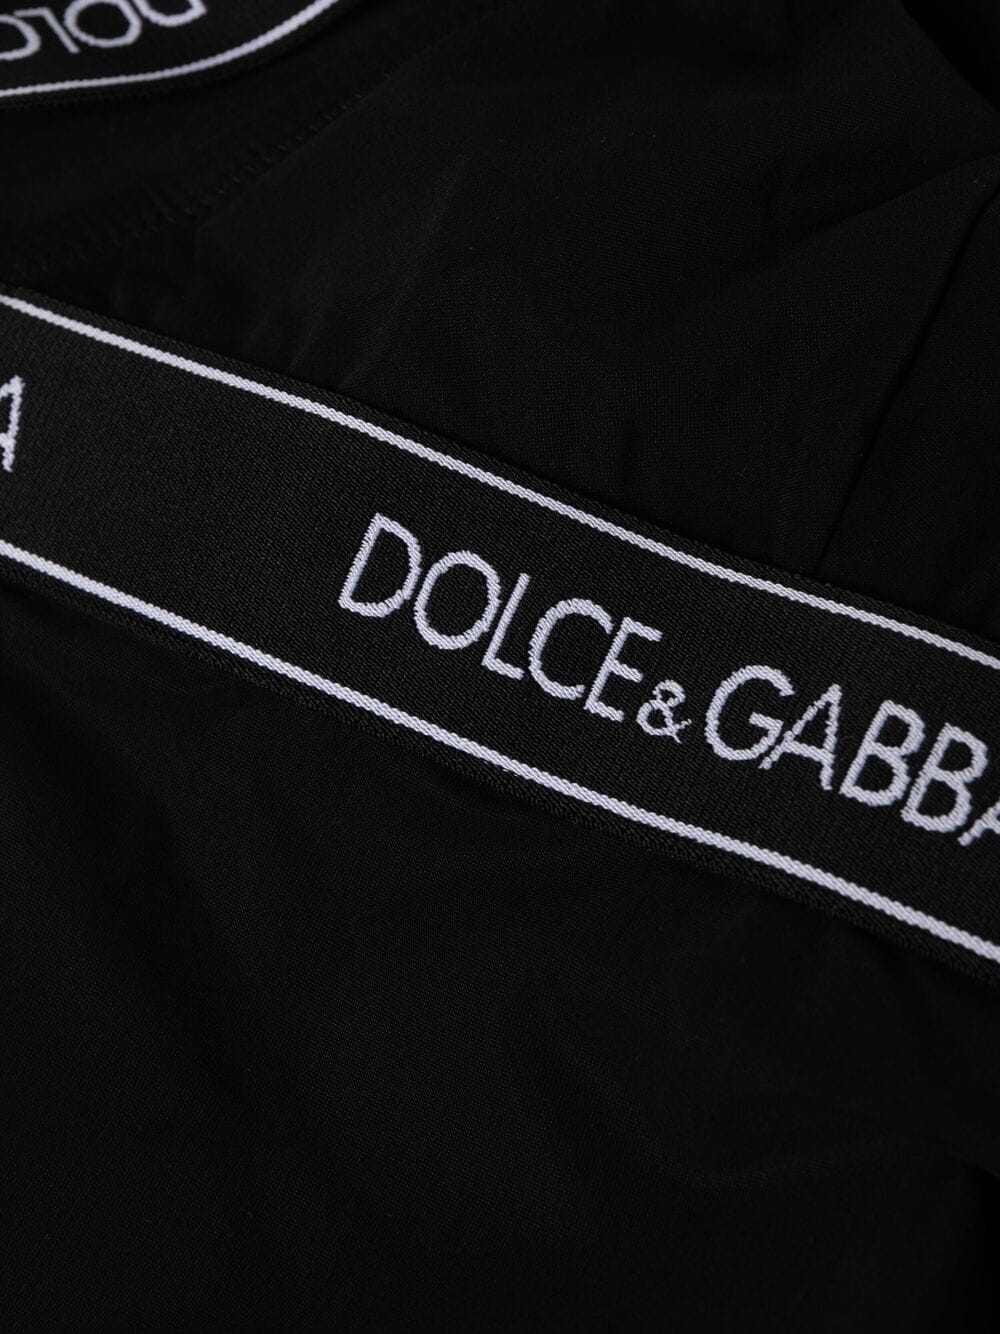 Dolce & Gabbana Sea Clothing Black